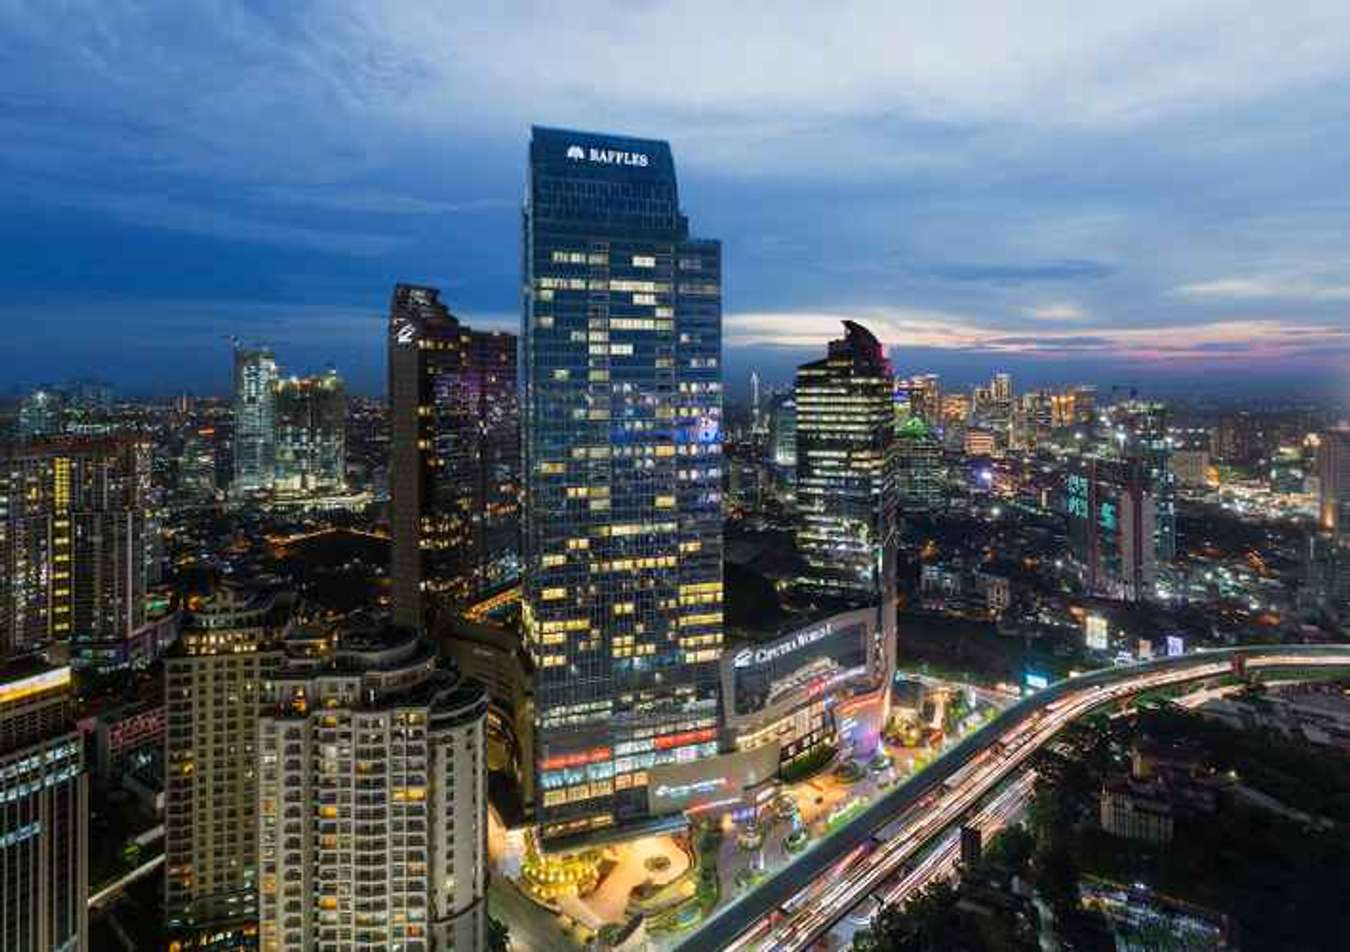 Raffles Jakarta - Hotel Tertinggi di Indonesia